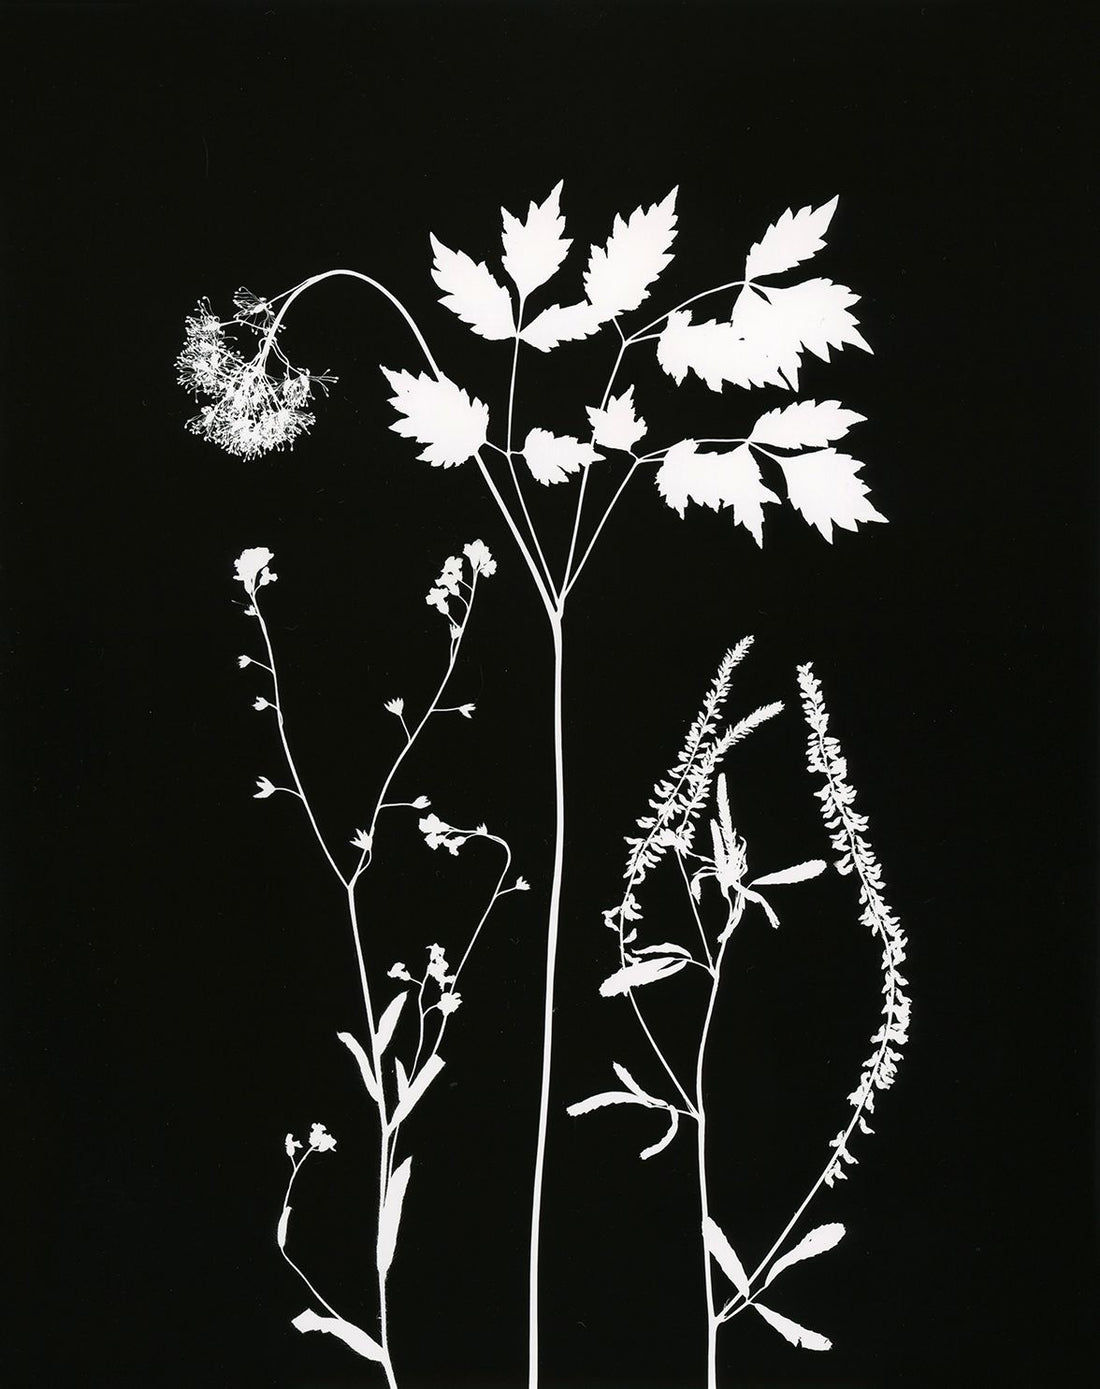 Original Photogram / Wildflowers 02 - art by artist from Canada Florigin - artterra online art gallery - Buy art of Canada Online - We ship to USA and Canada